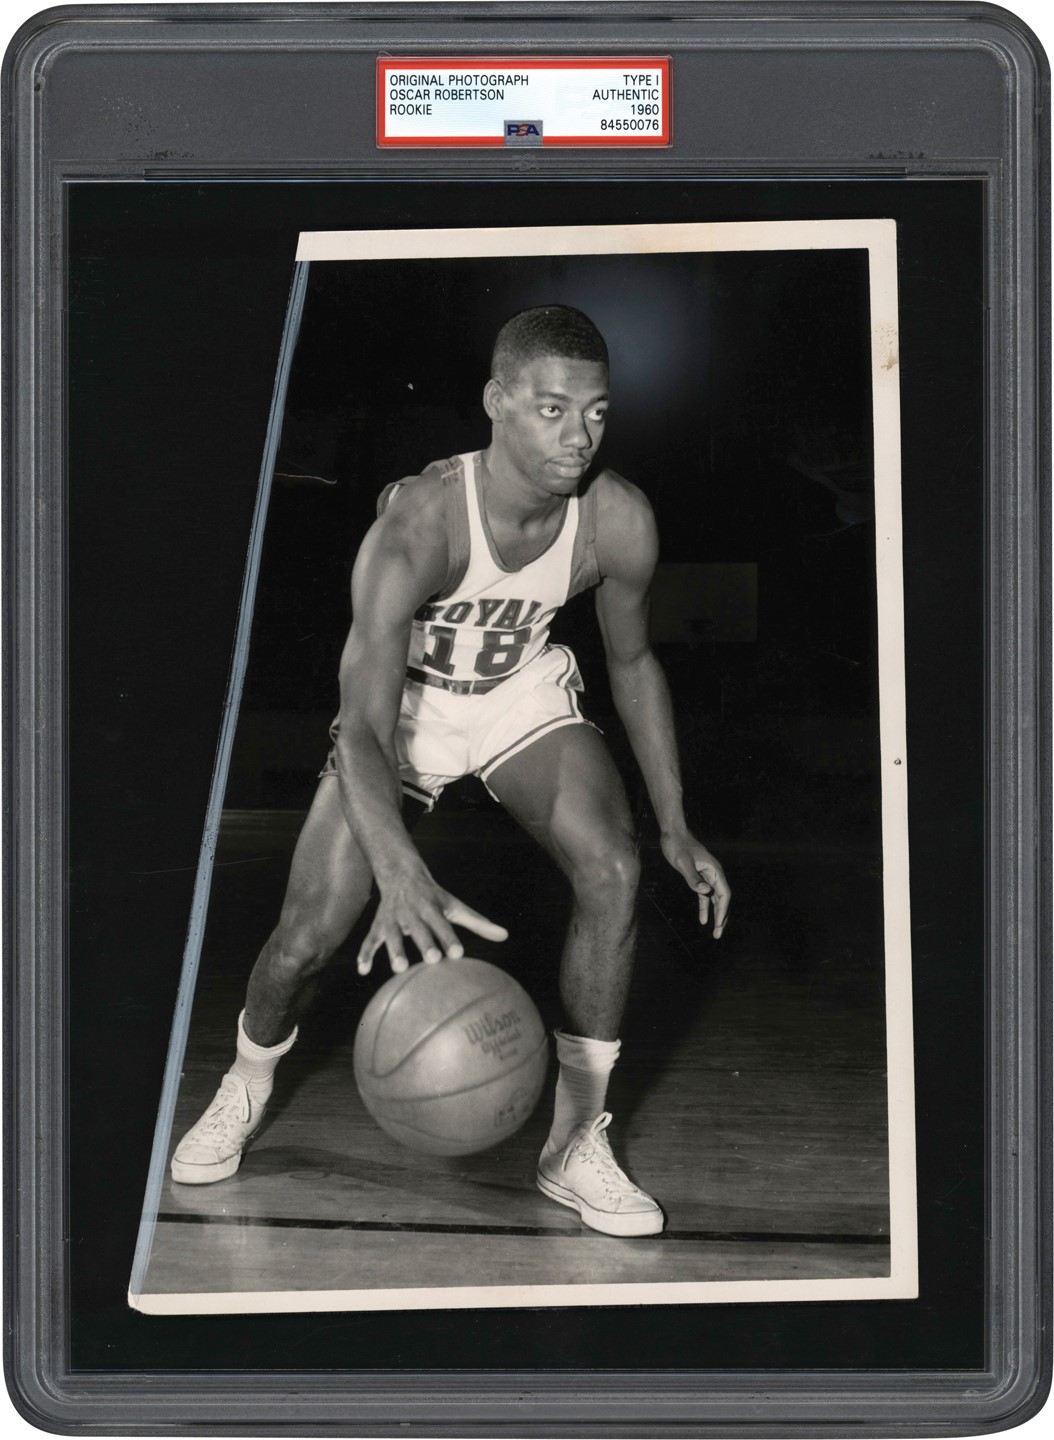 - 1960 Oscar Robertson Rookie Photograph - His Earliest Known NBA Photo (PSA Type I)